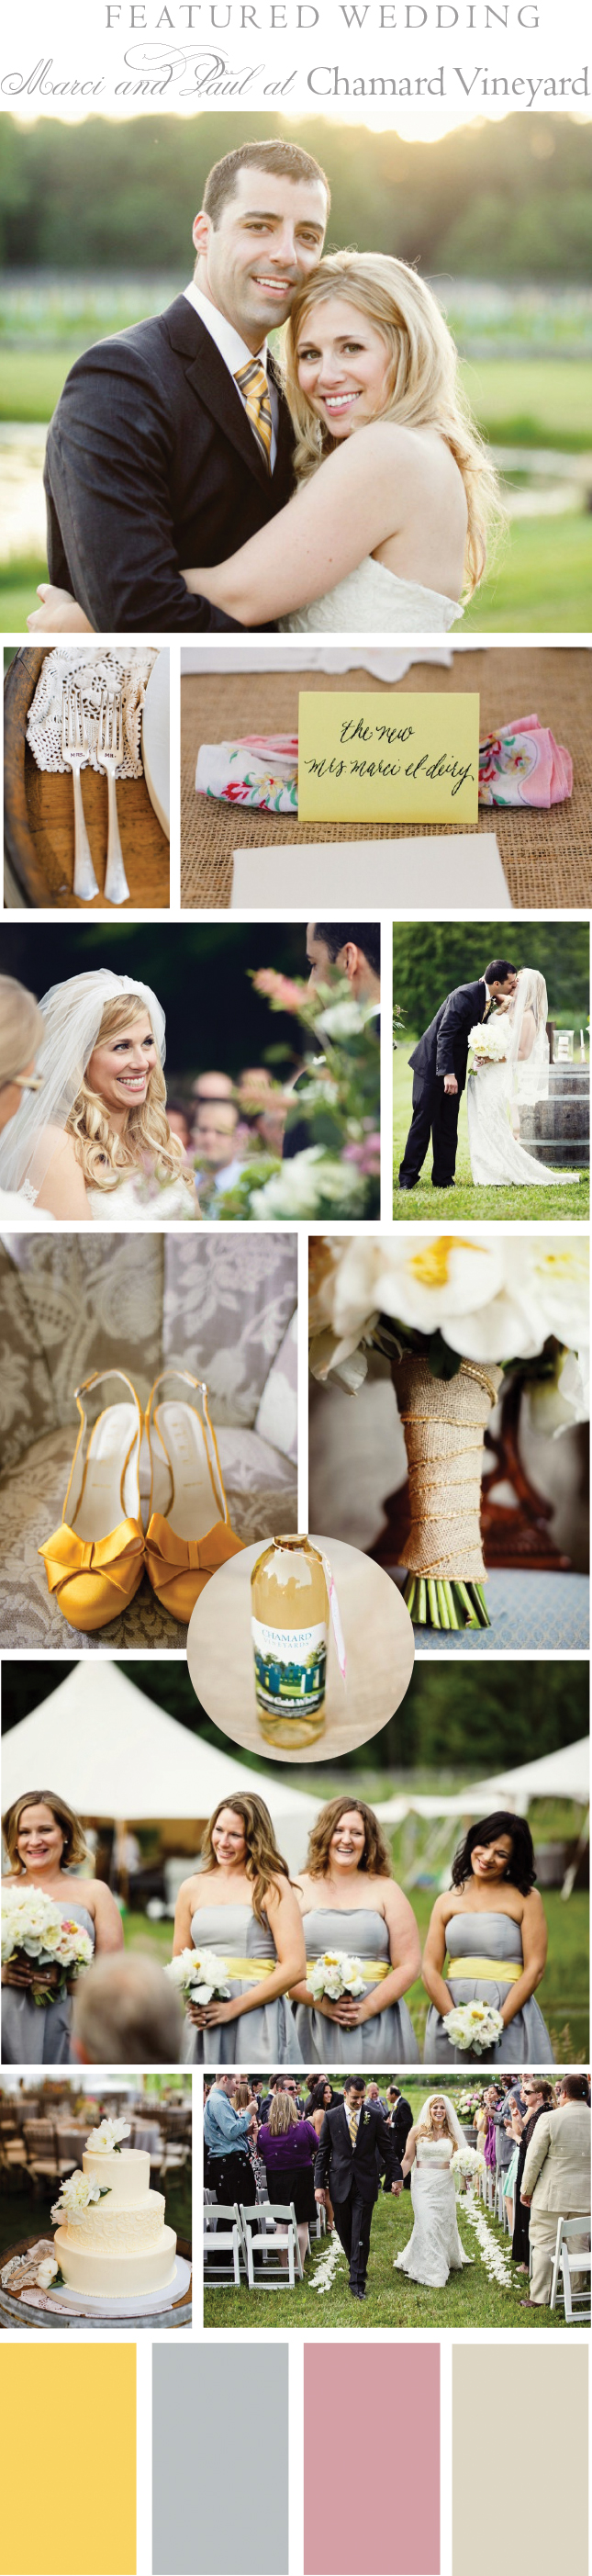 Featured Wedding: Marci + Paul at Chamard Vineyard. Desktop Image